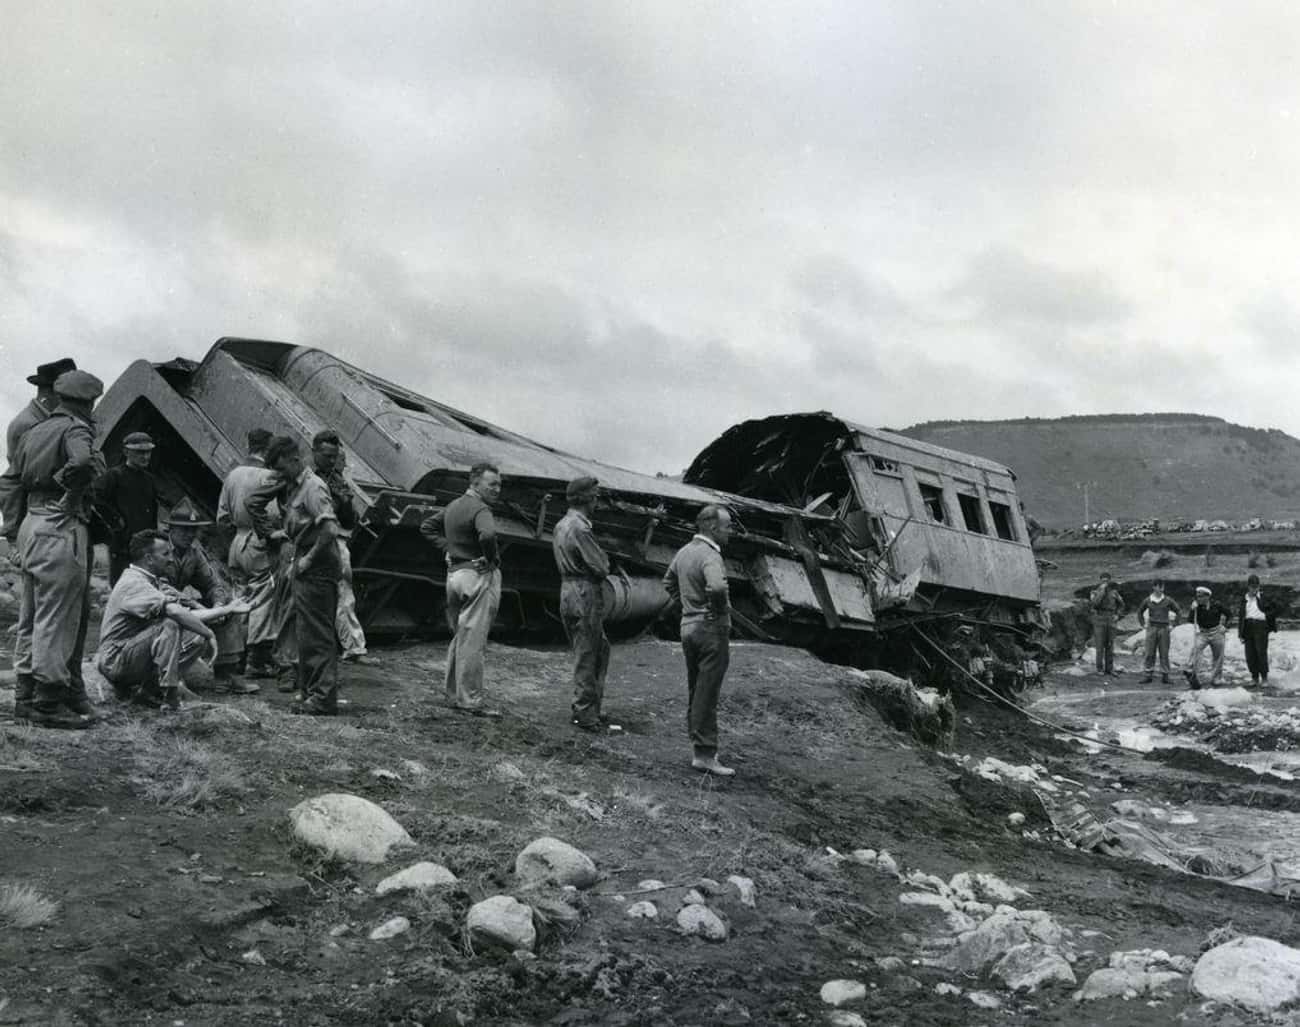 The Tangiwai Train Disaster